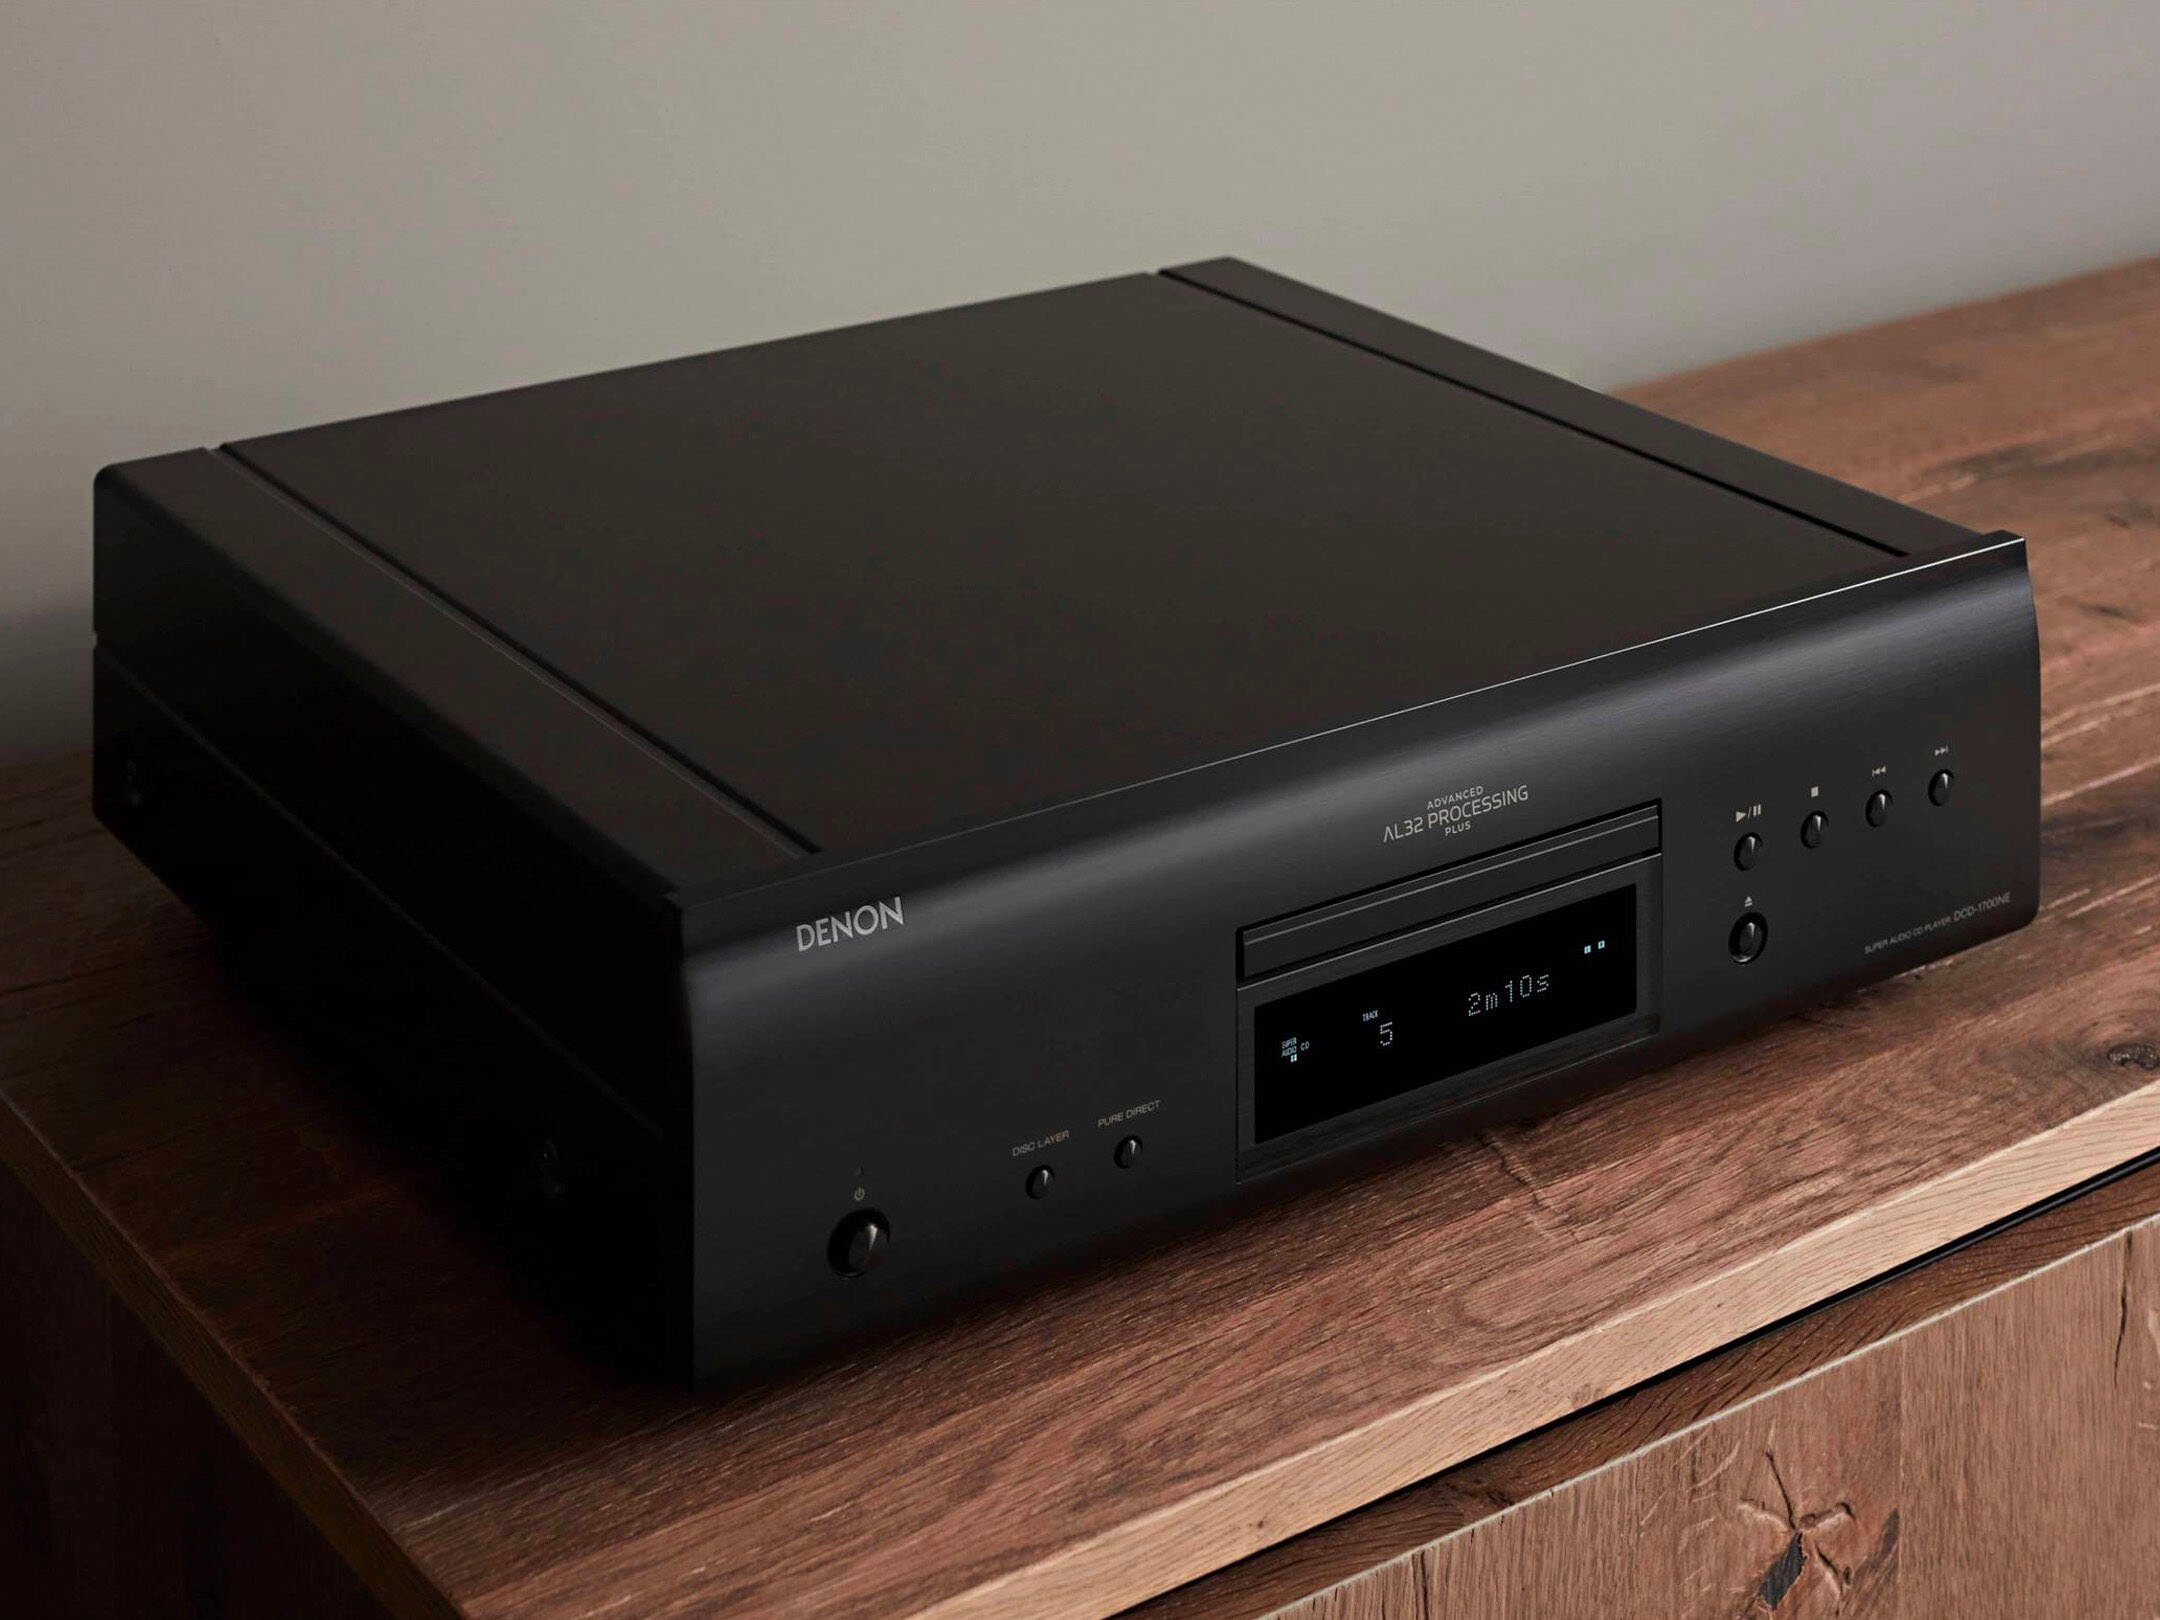 Denon CD-Player DCD-1700NE schwarz